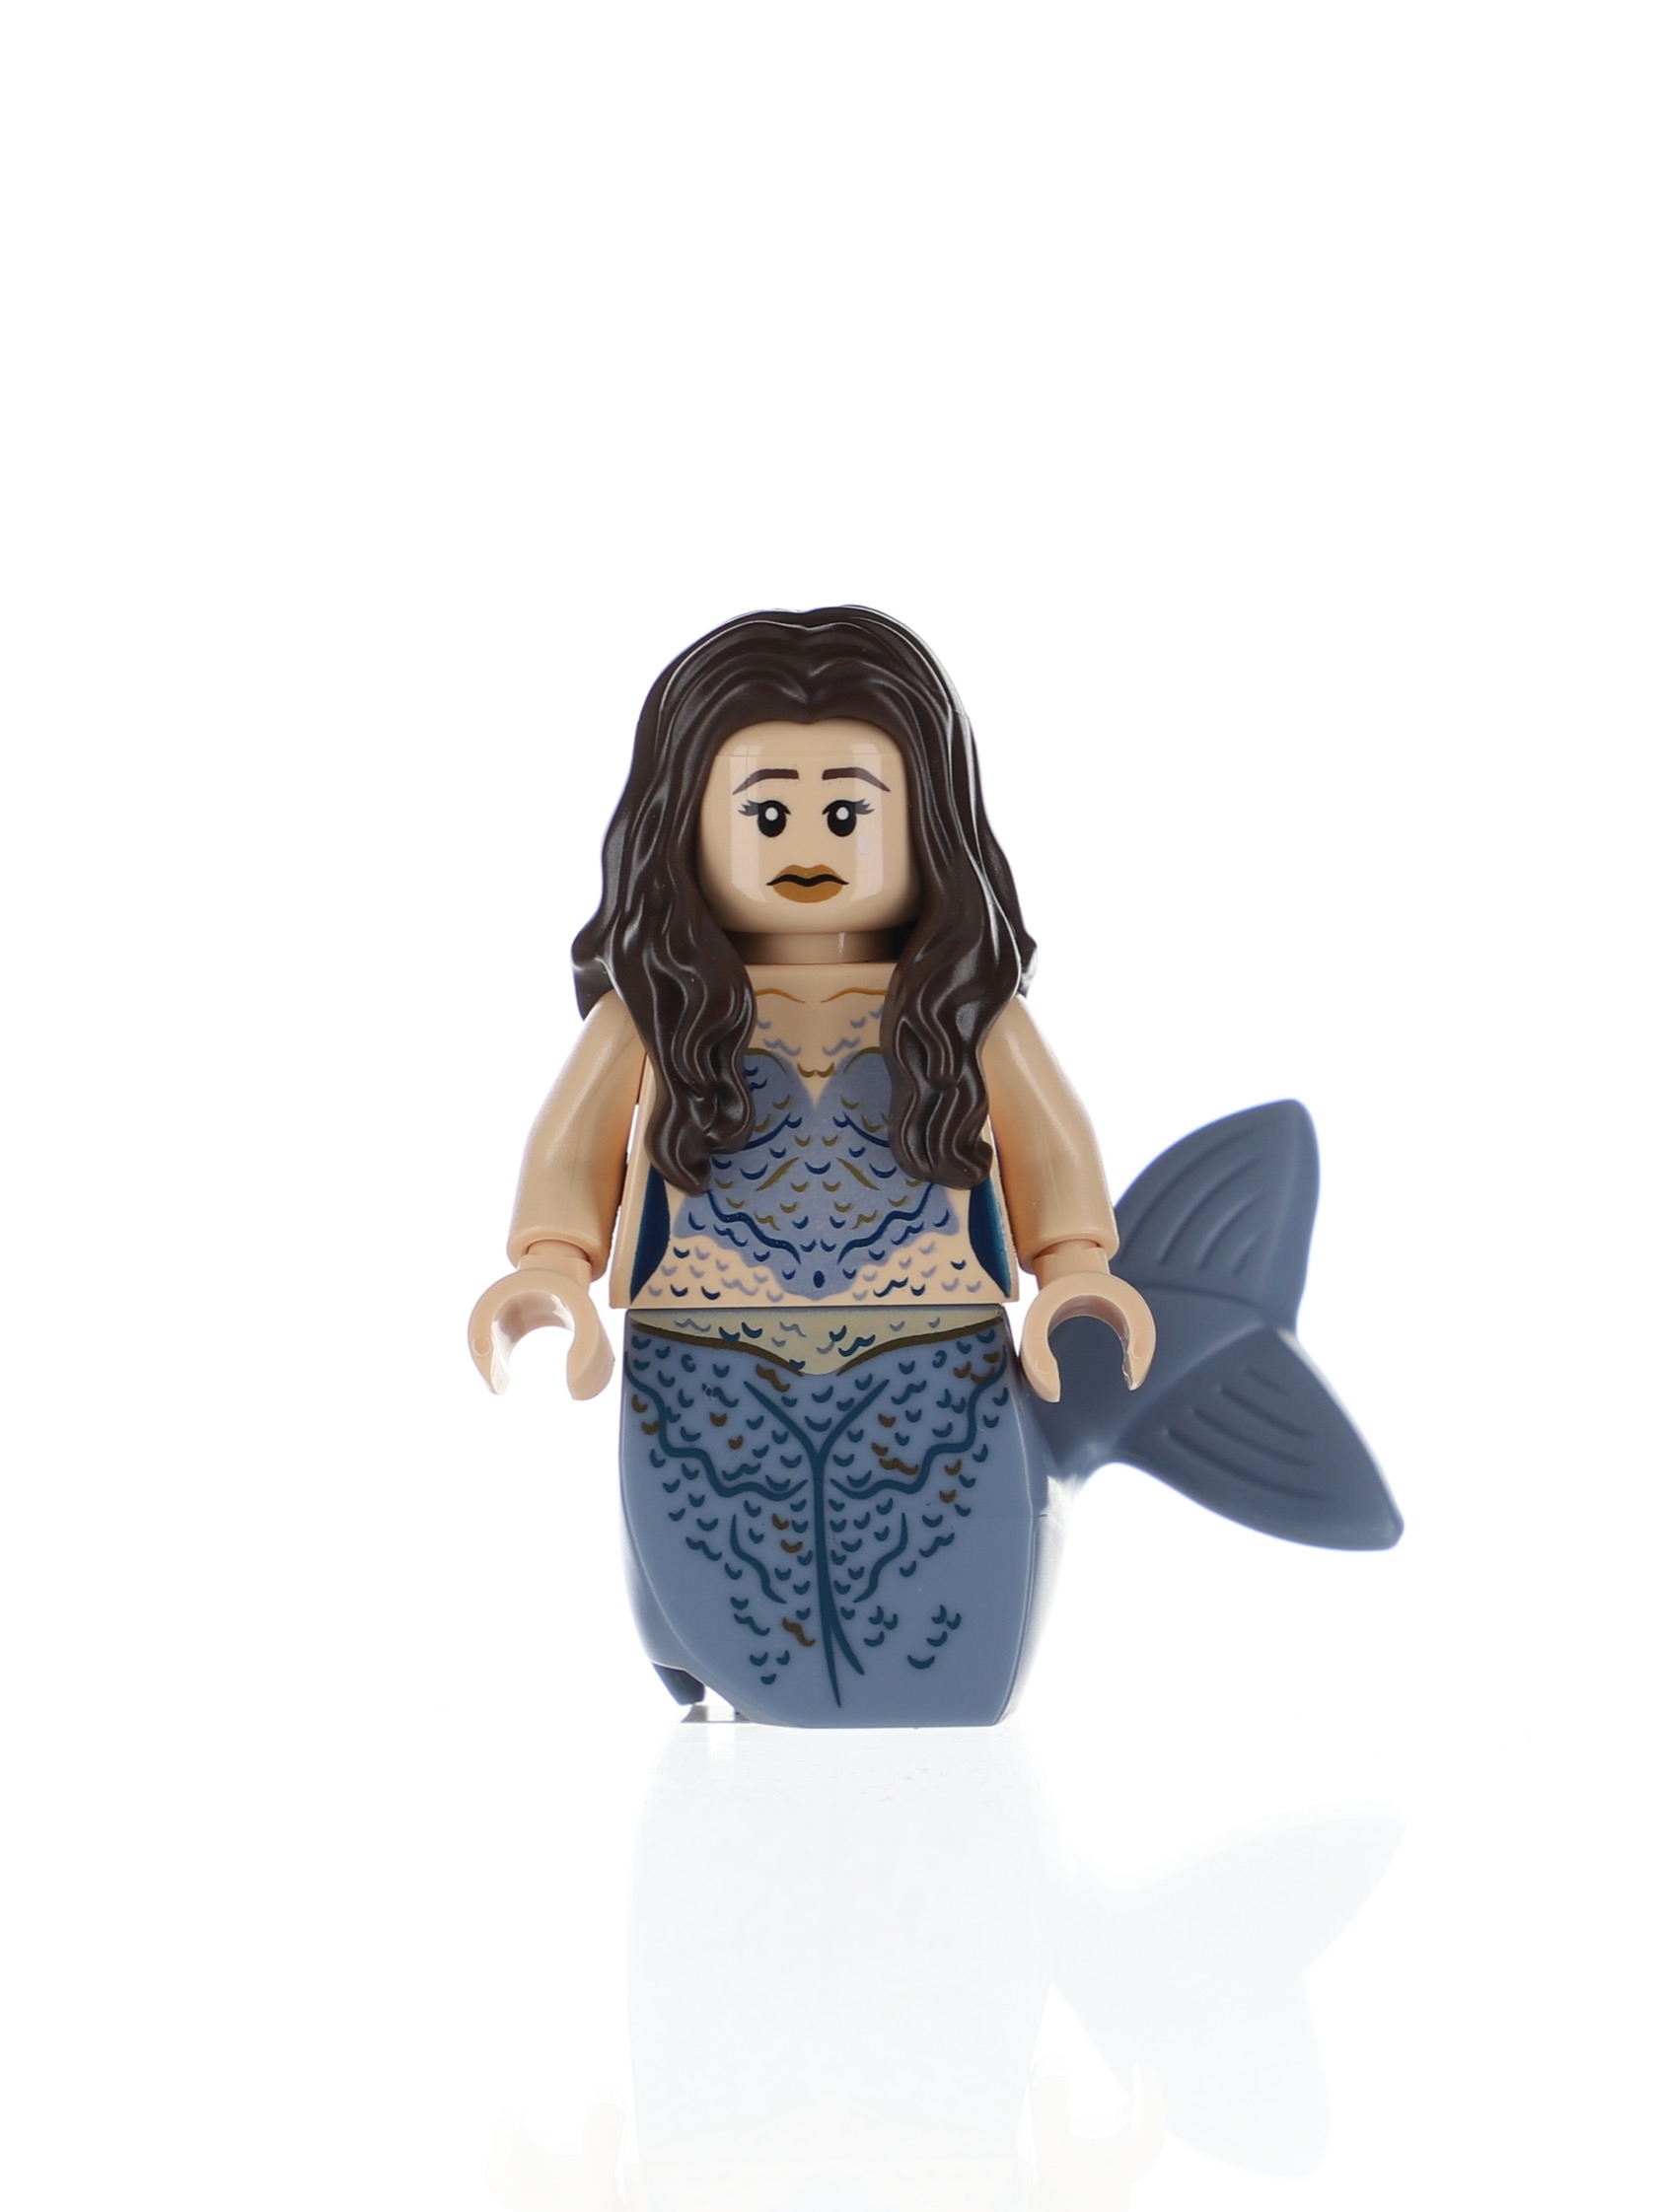 poc025 NEW LEGO Mermaid Syrena FROM SET 4194 PIRATES OF THE CARIBBEAN